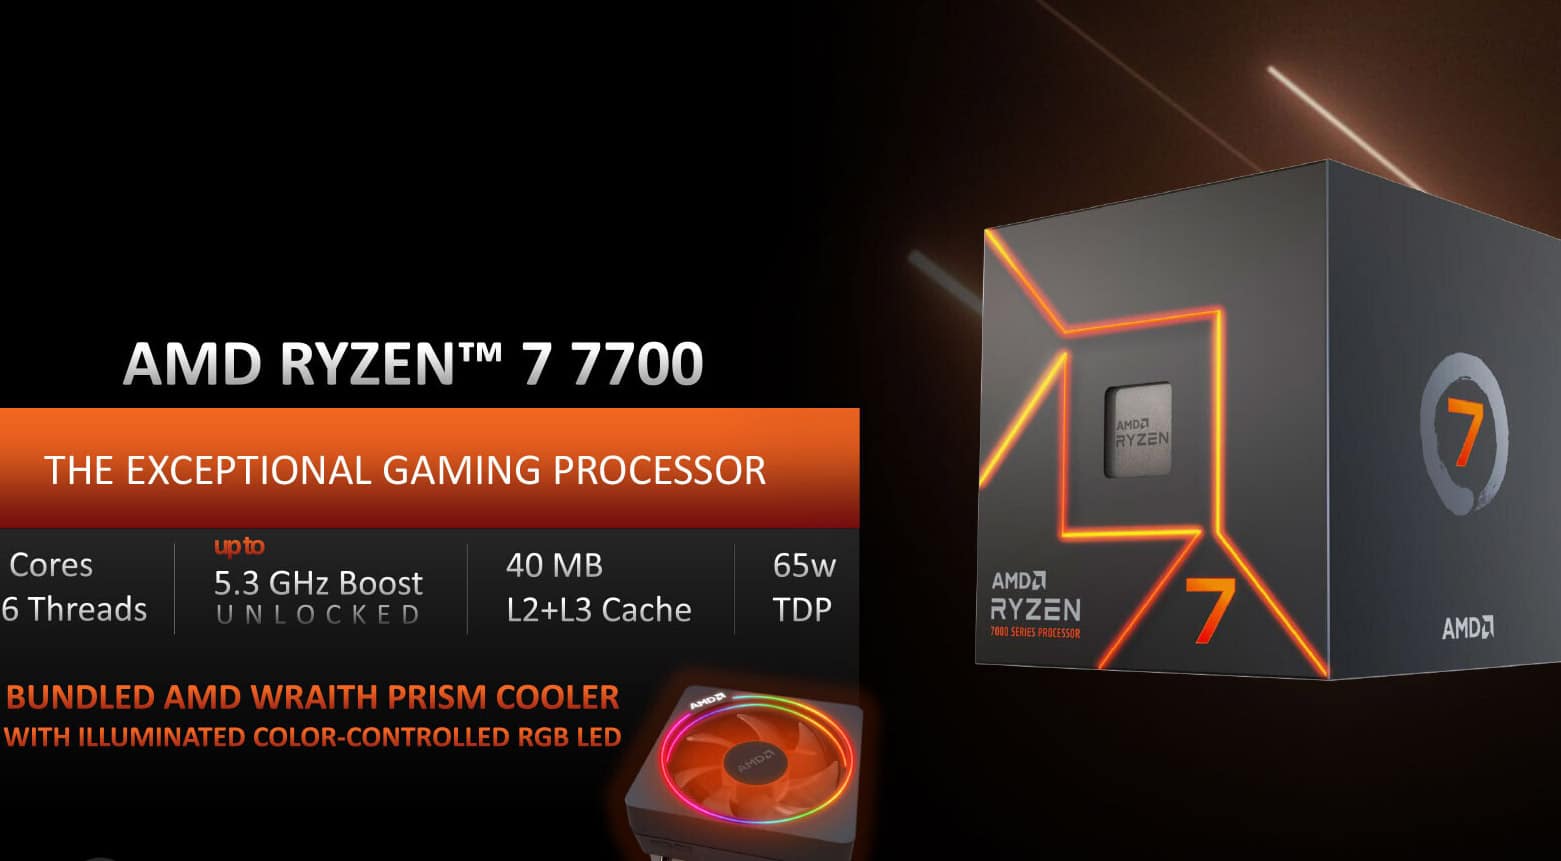 Processeur AMD Ryzen 5 7600 5,1Ghz –